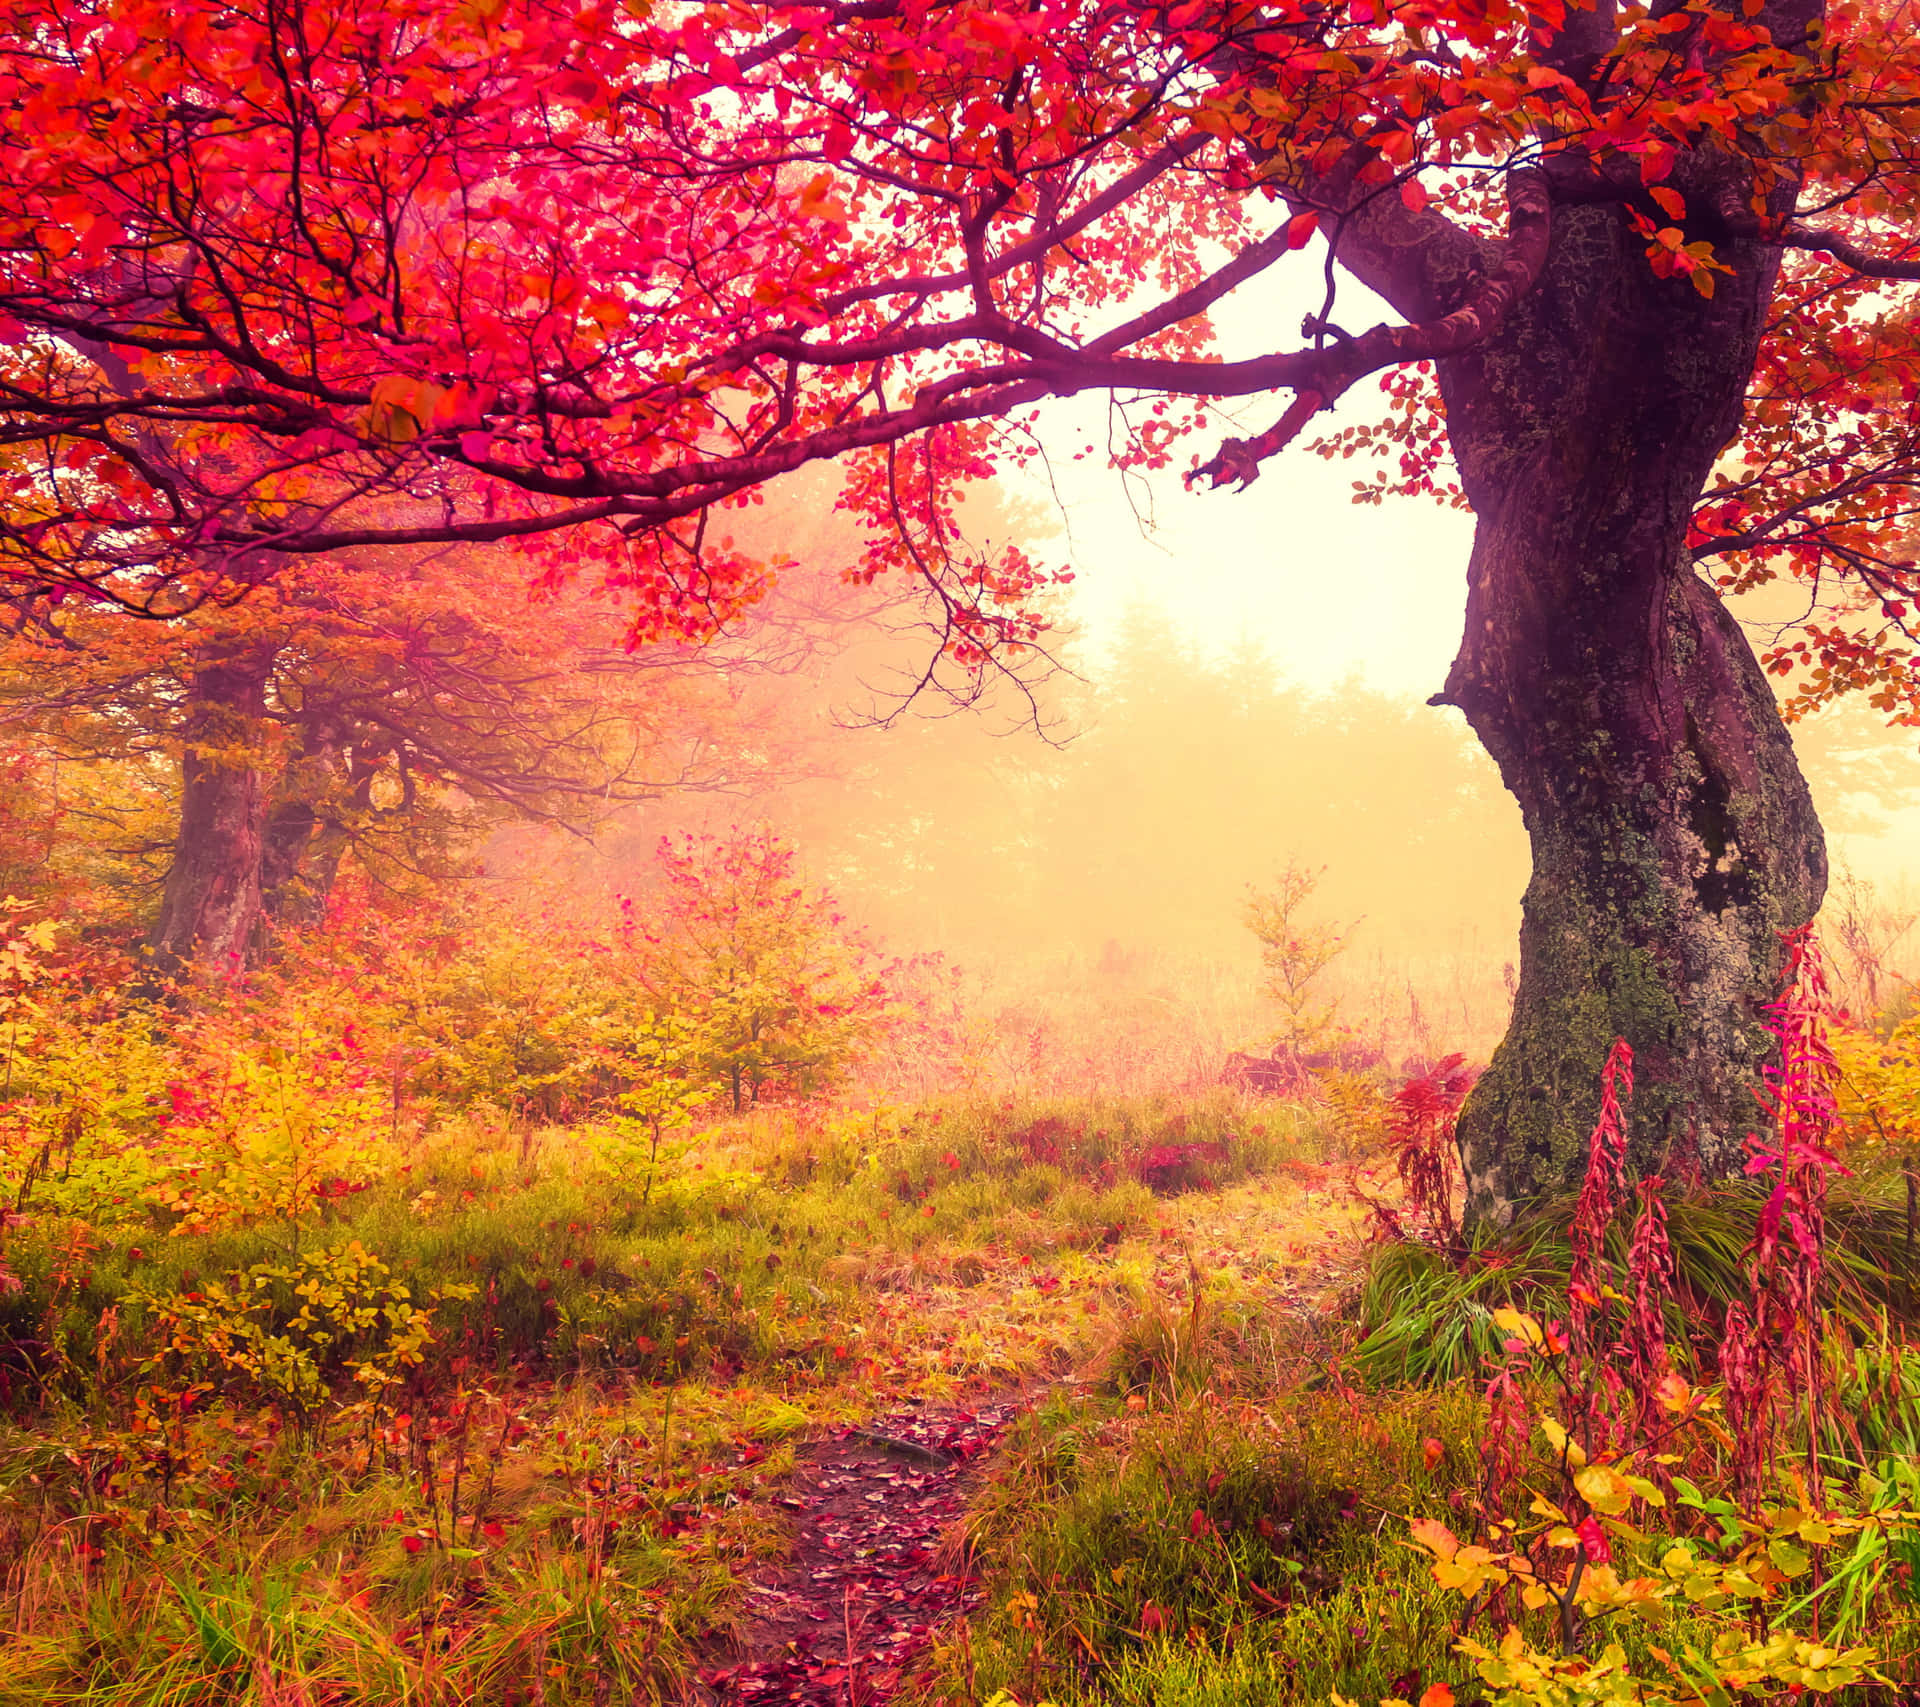 Enchanting Fall Mist Over a Serene Landscape Wallpaper